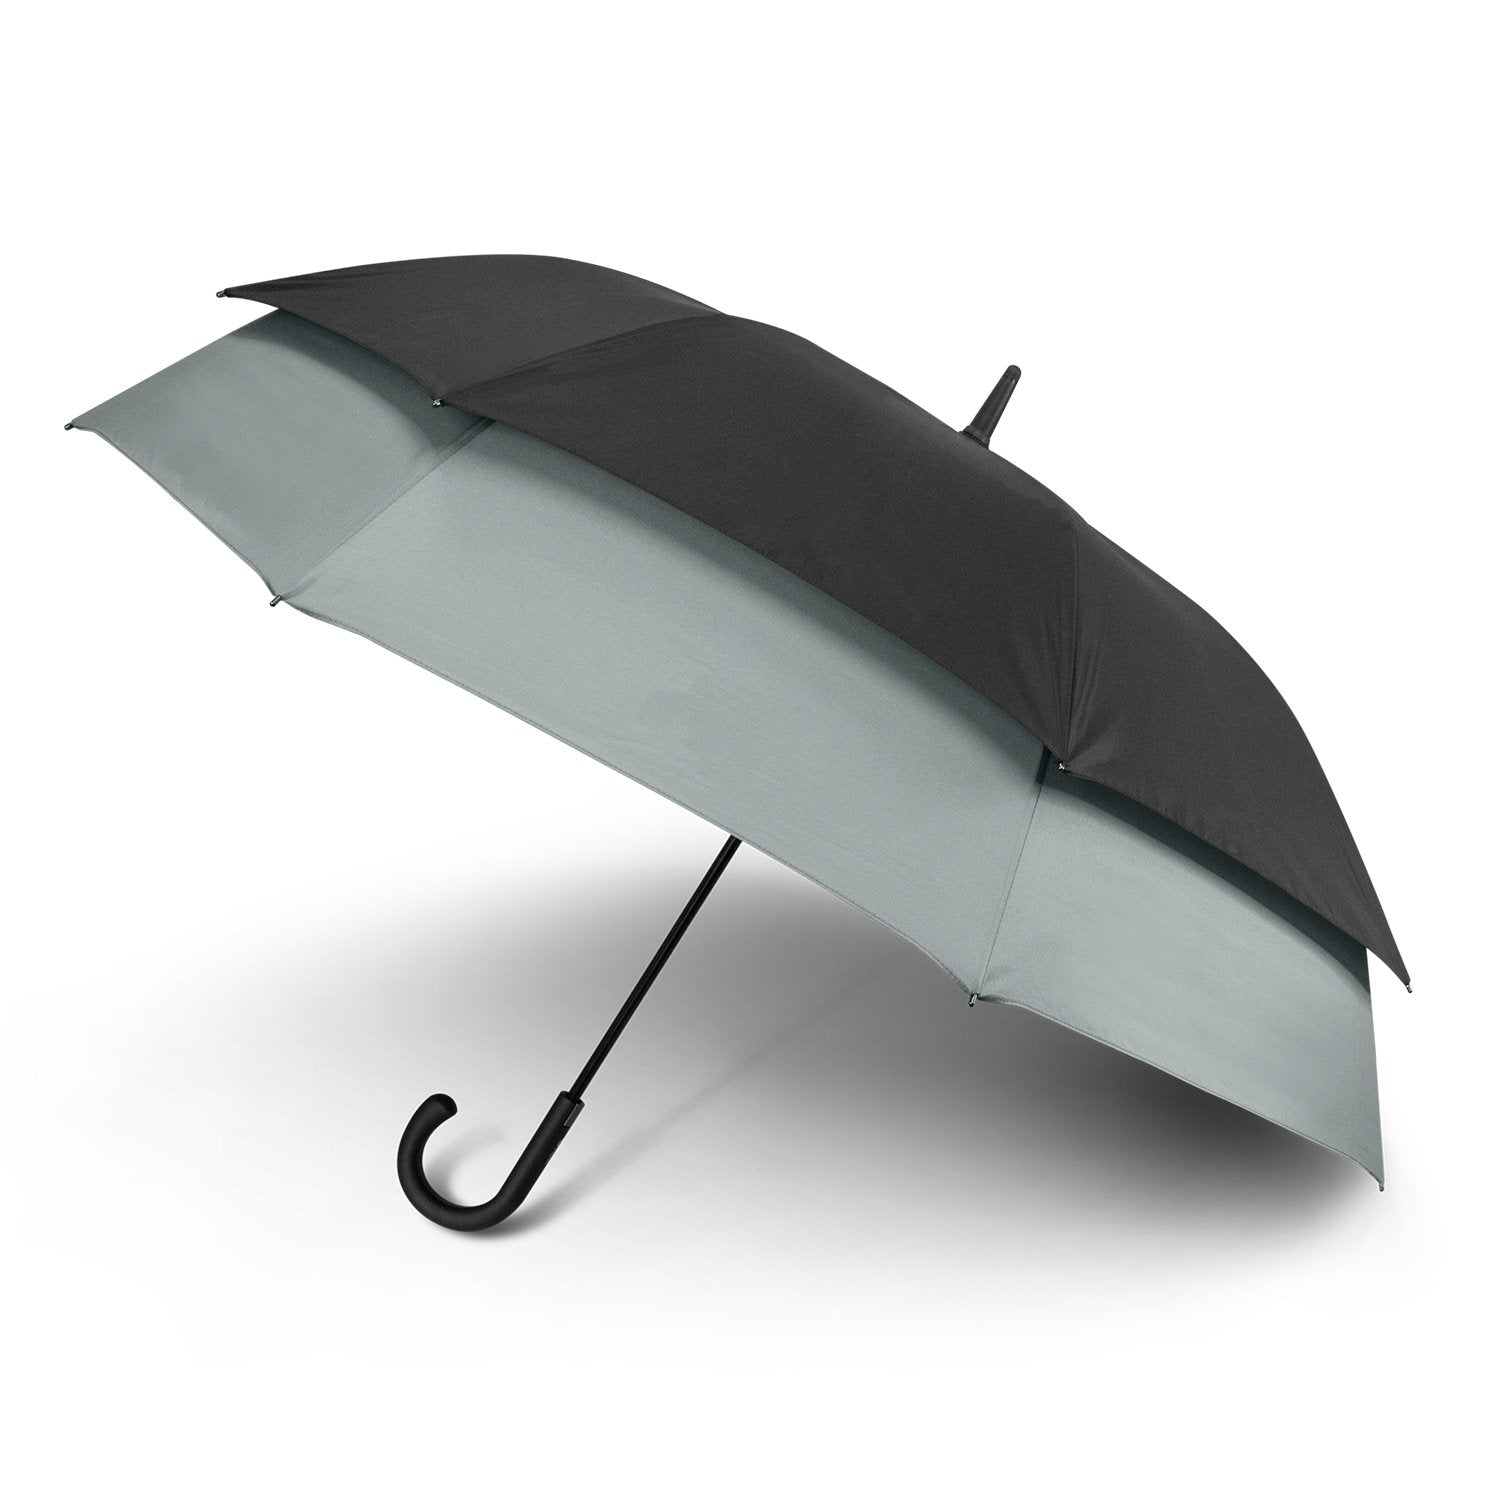 SWISS PEAK®️ Expandable Umbrella With Wind Proof Fibreglass Frame - Auto-Open Push Button Feature